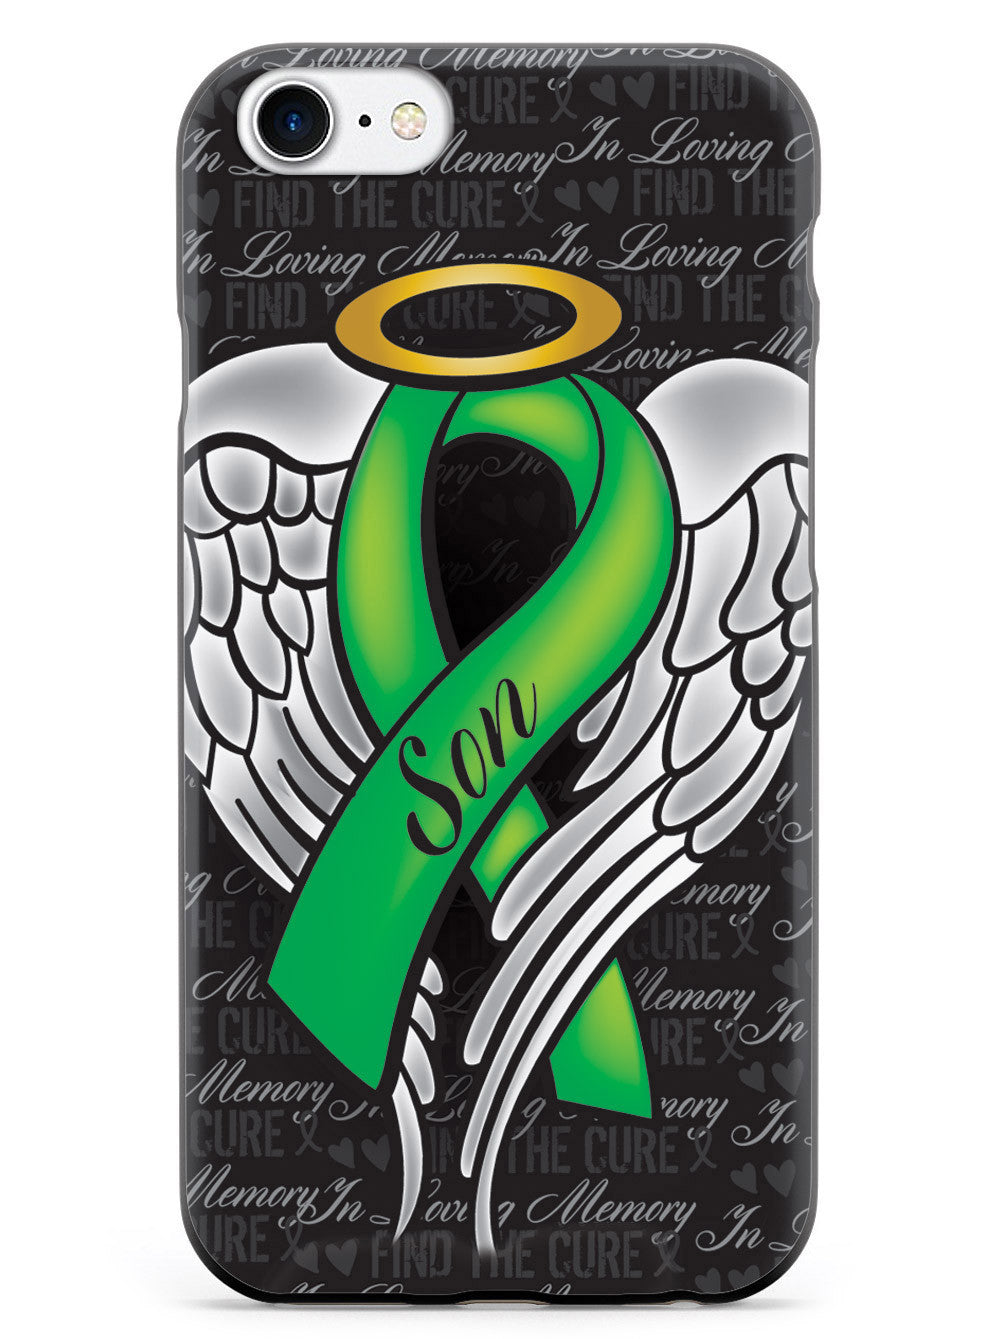 In Loving Memory of My Son - Green Ribbon Case